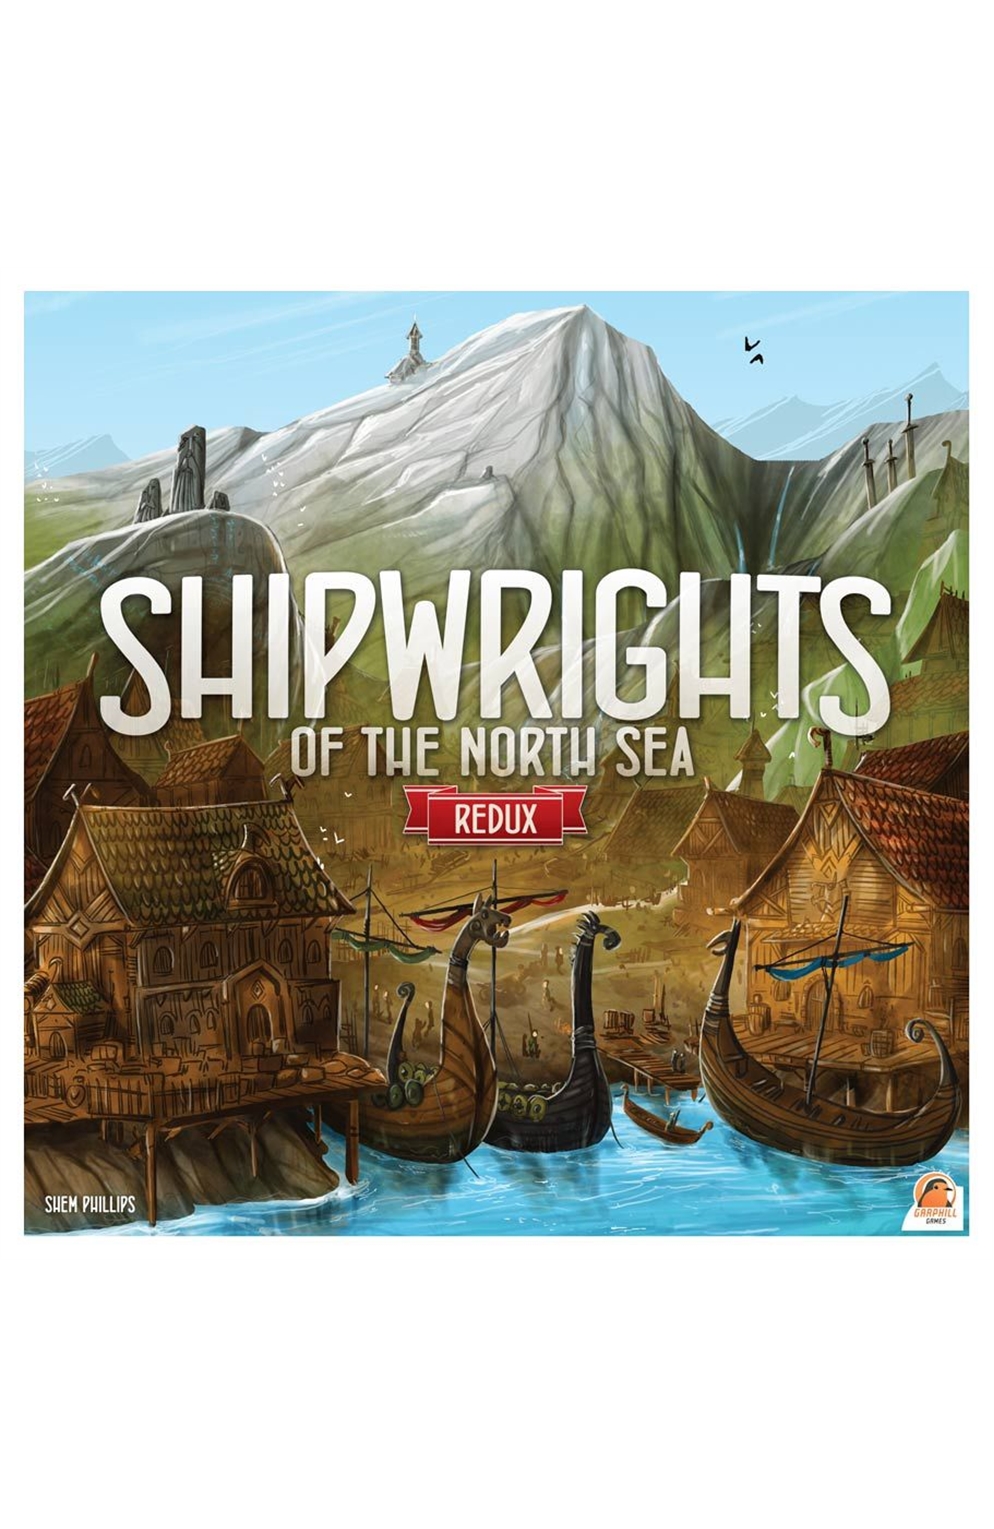 Shipwrights of The North Sea: Redux